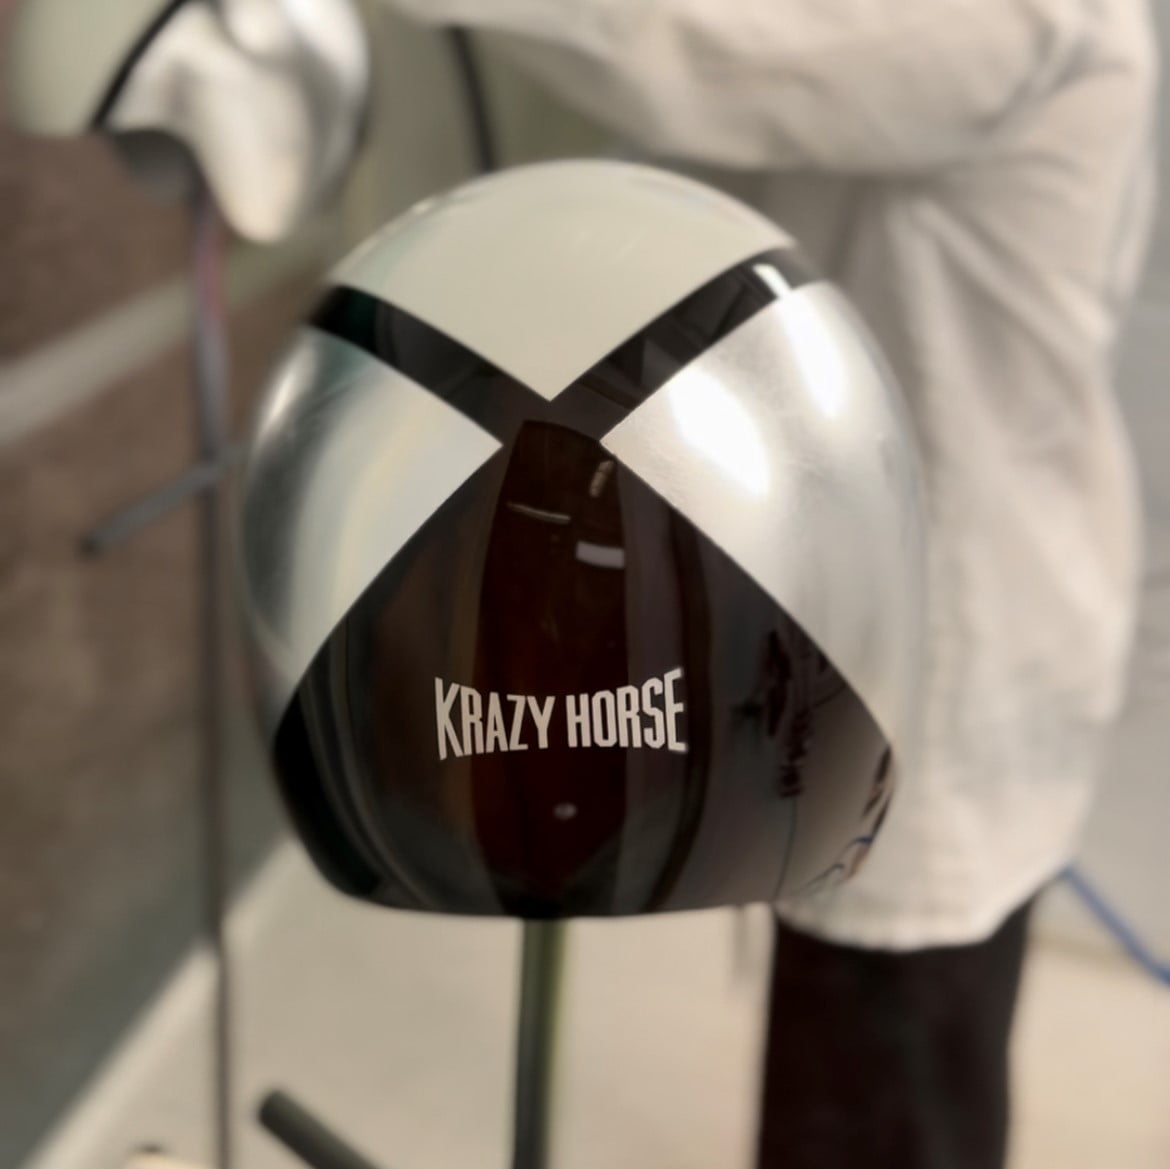 Krazy Horse collaboration via Machine Media Inc. for use by 360 Magazine